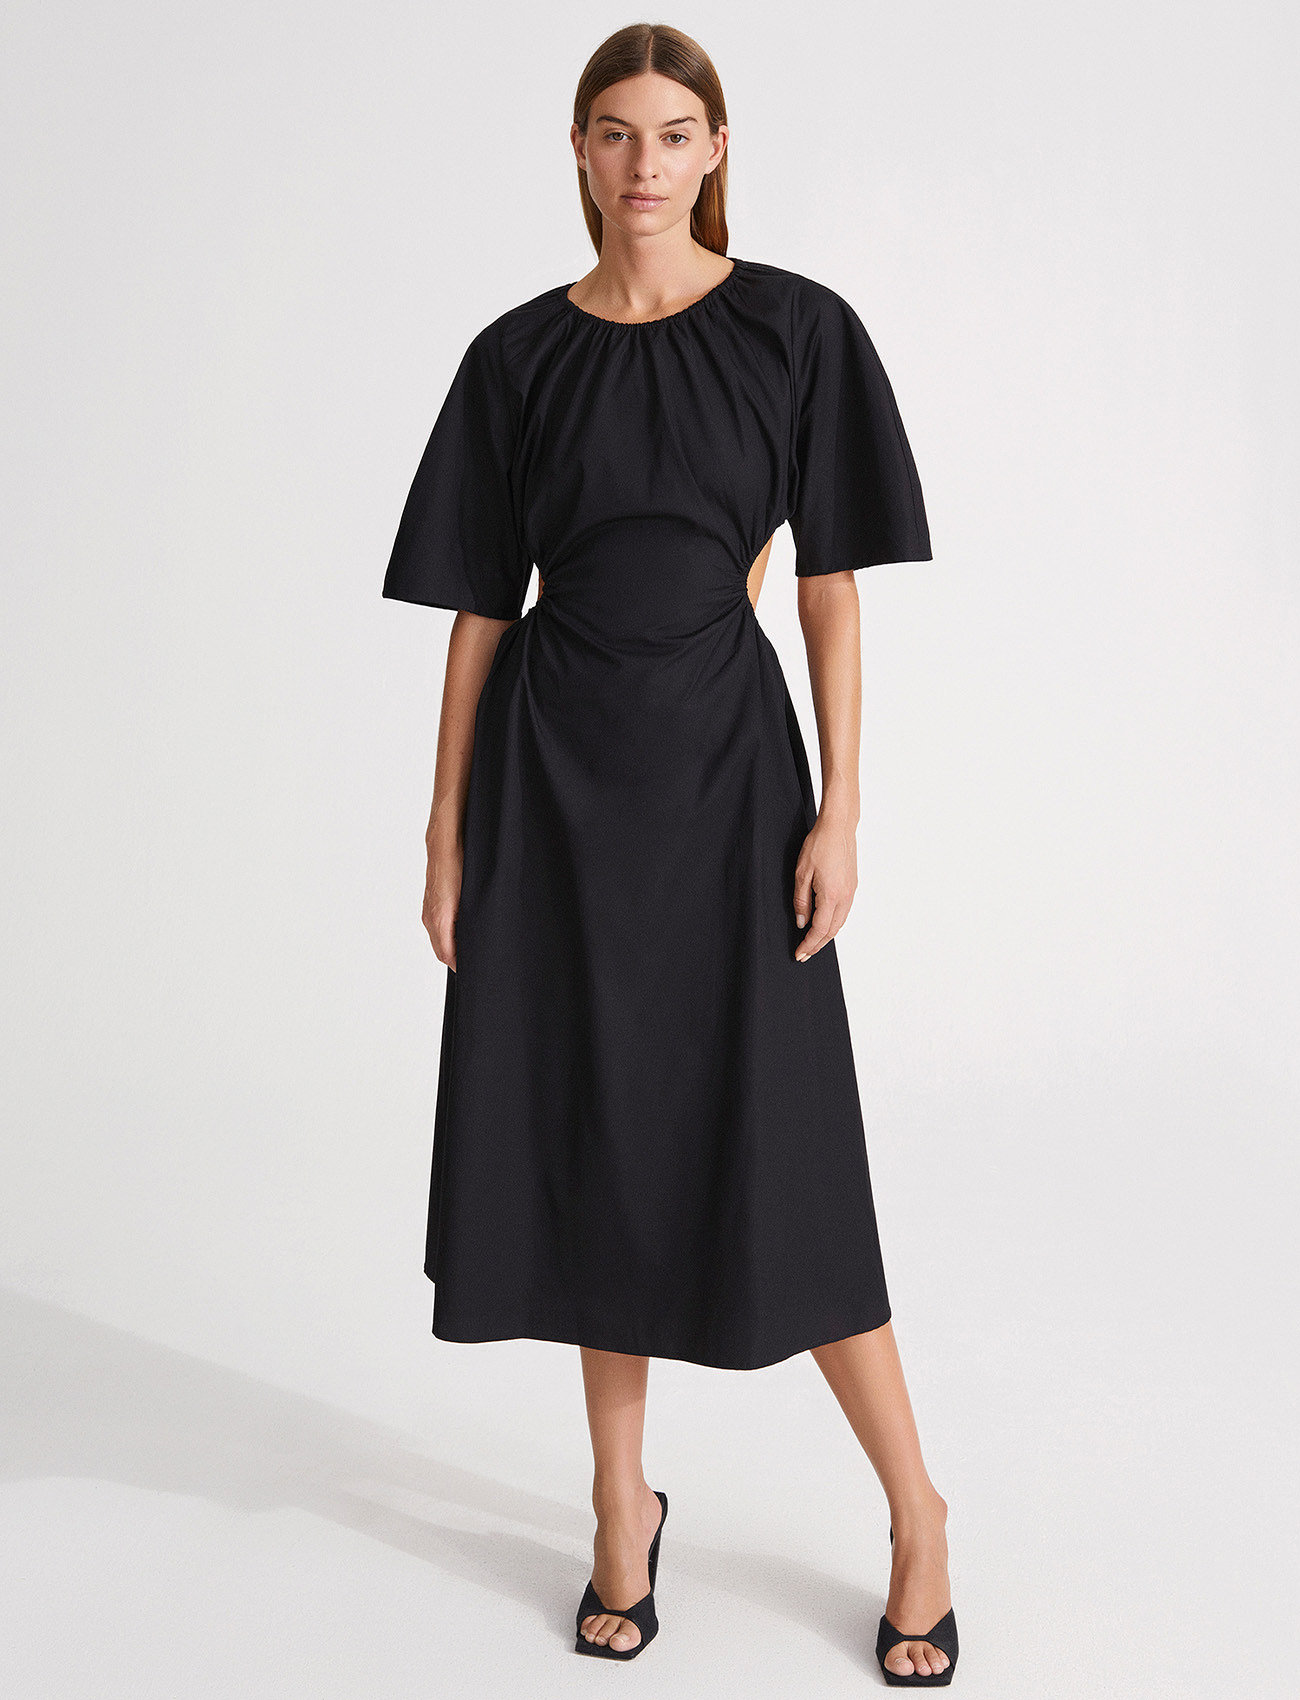 Stylein - JARAMA DRESS - midiklänningar - black - 0